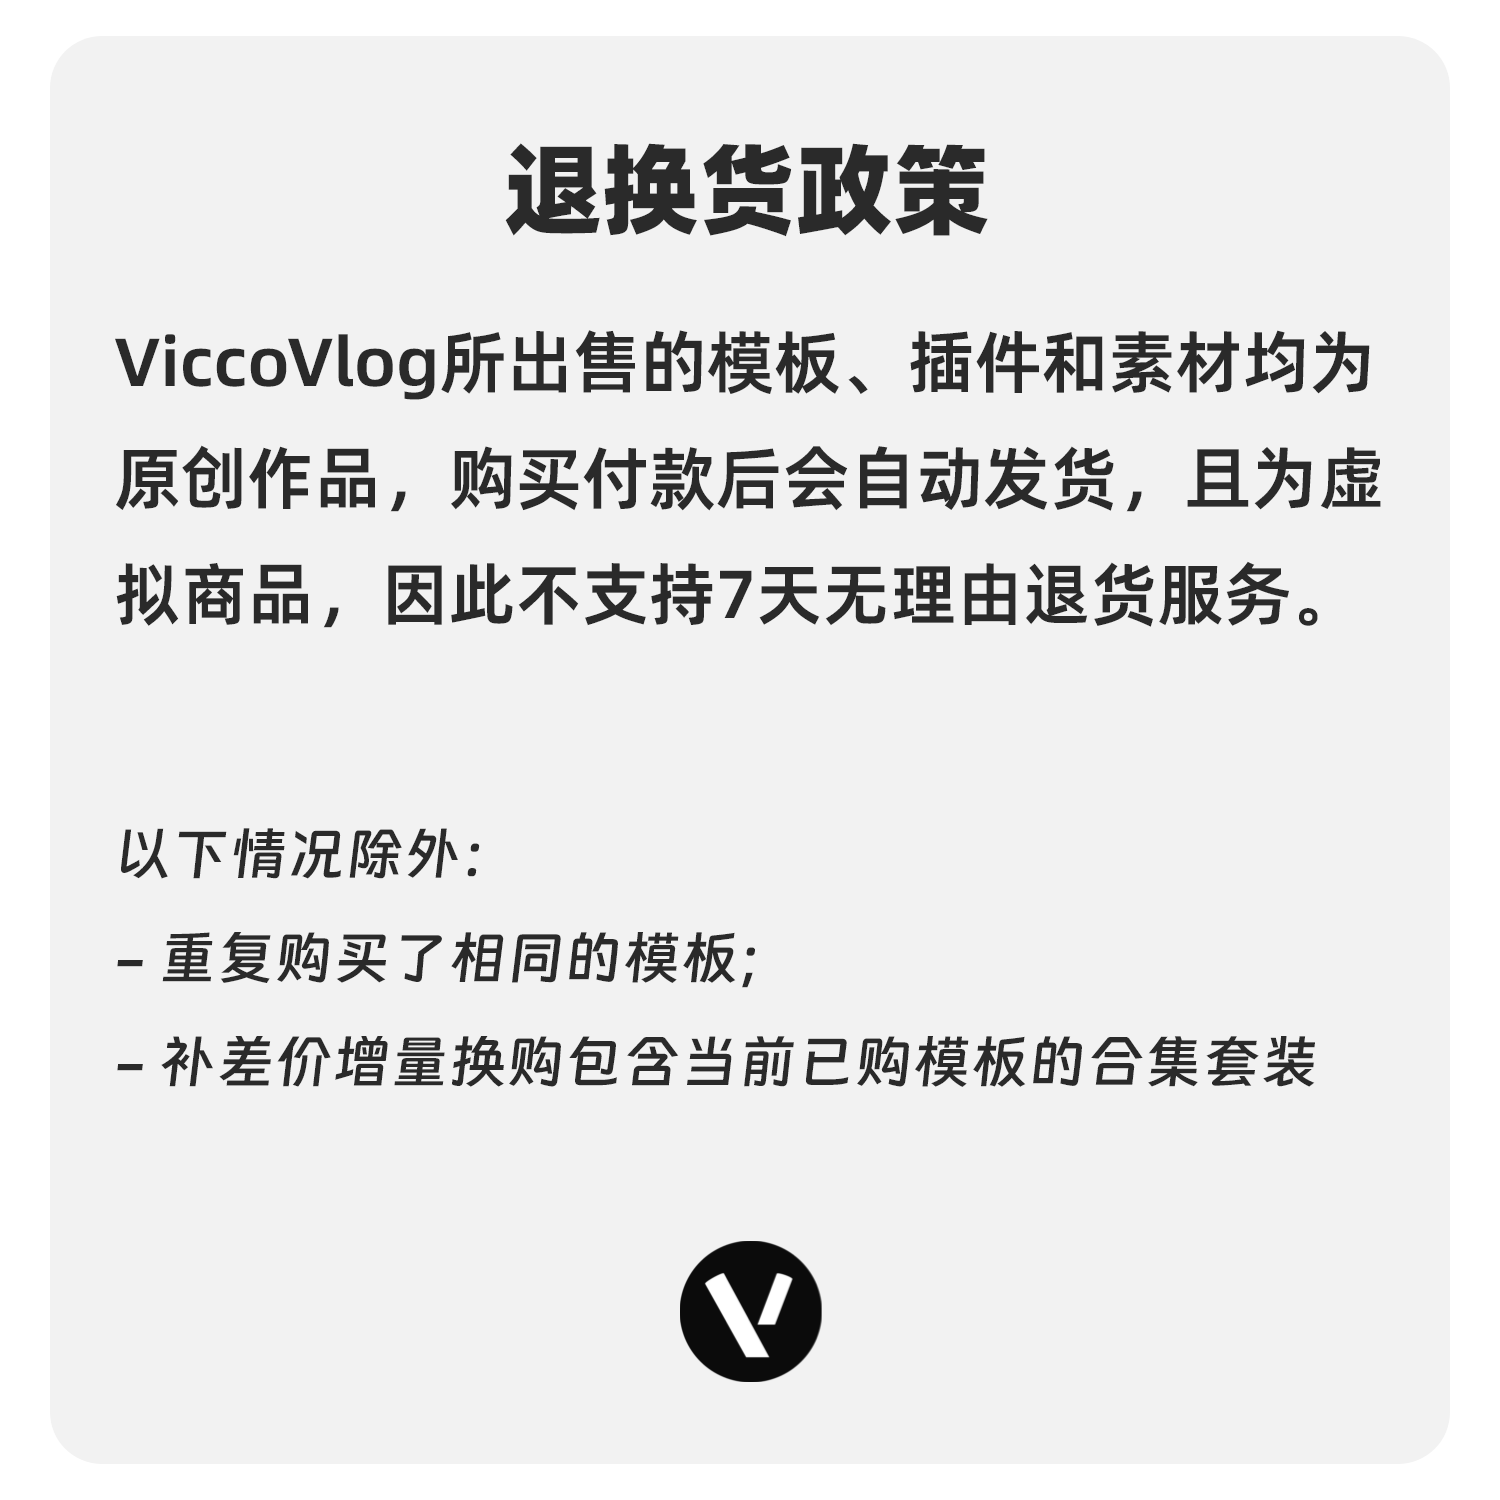 ViccoVlog 达芬奇 MG动画预设模板套件 箭头|标尺|框选|动态背景 - 图1